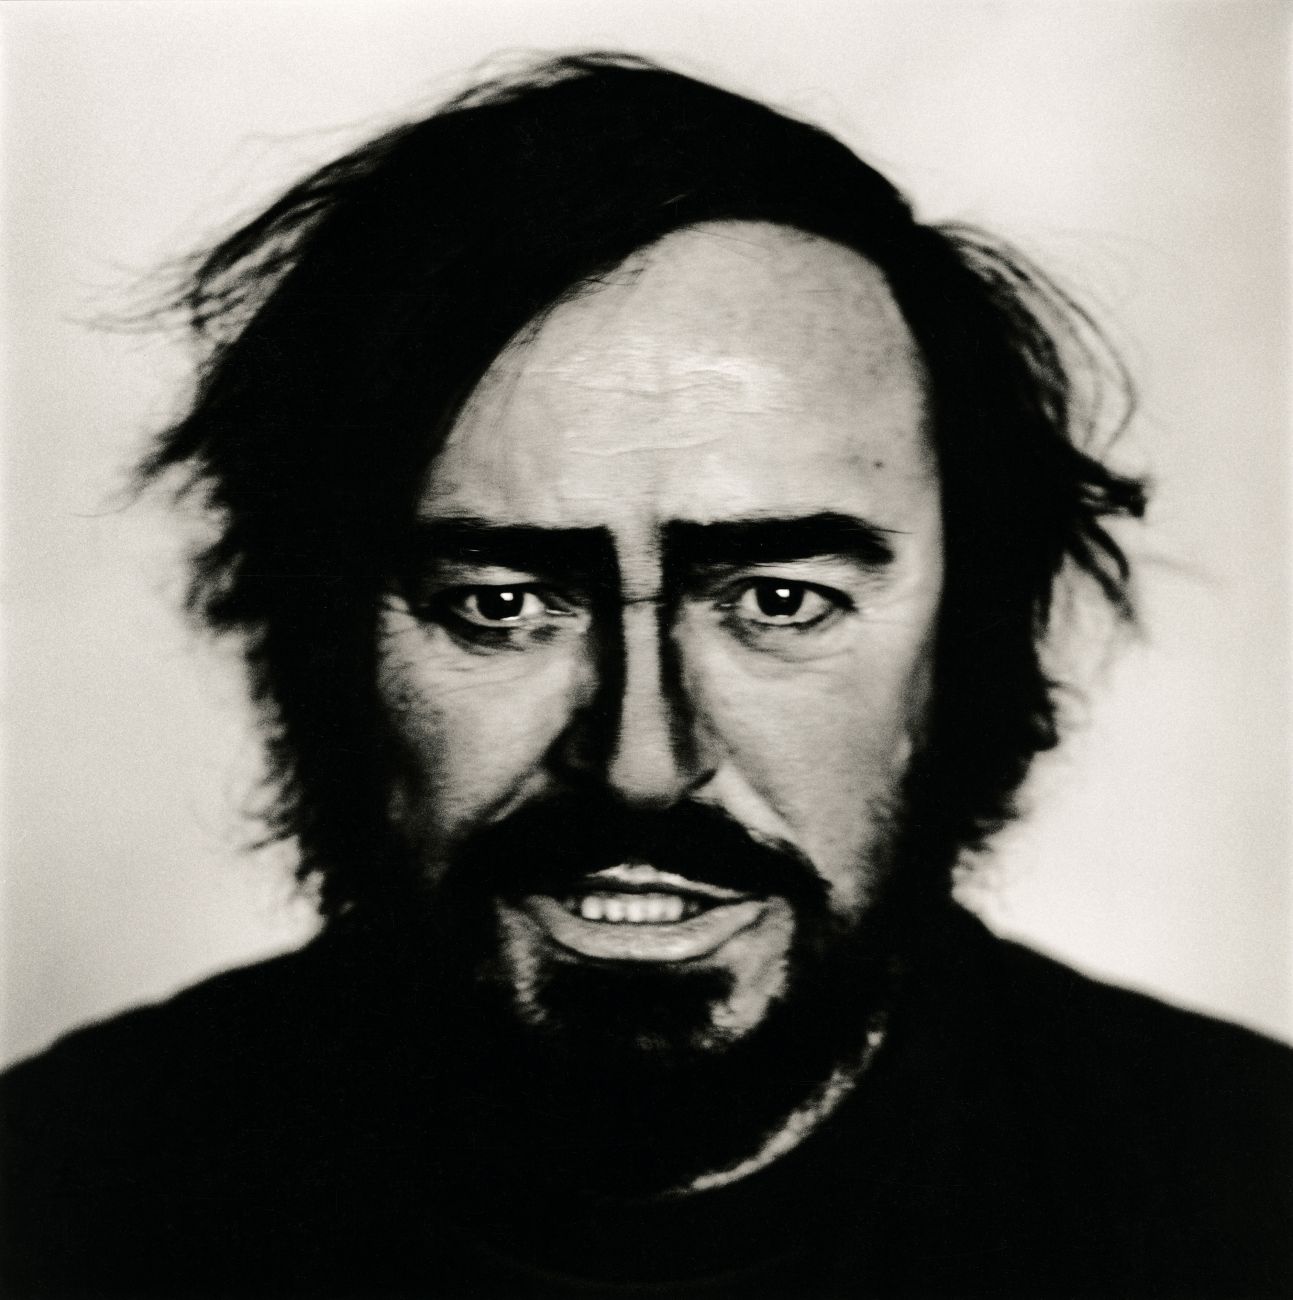 Luciano Pavarotti by Anton Corbijn